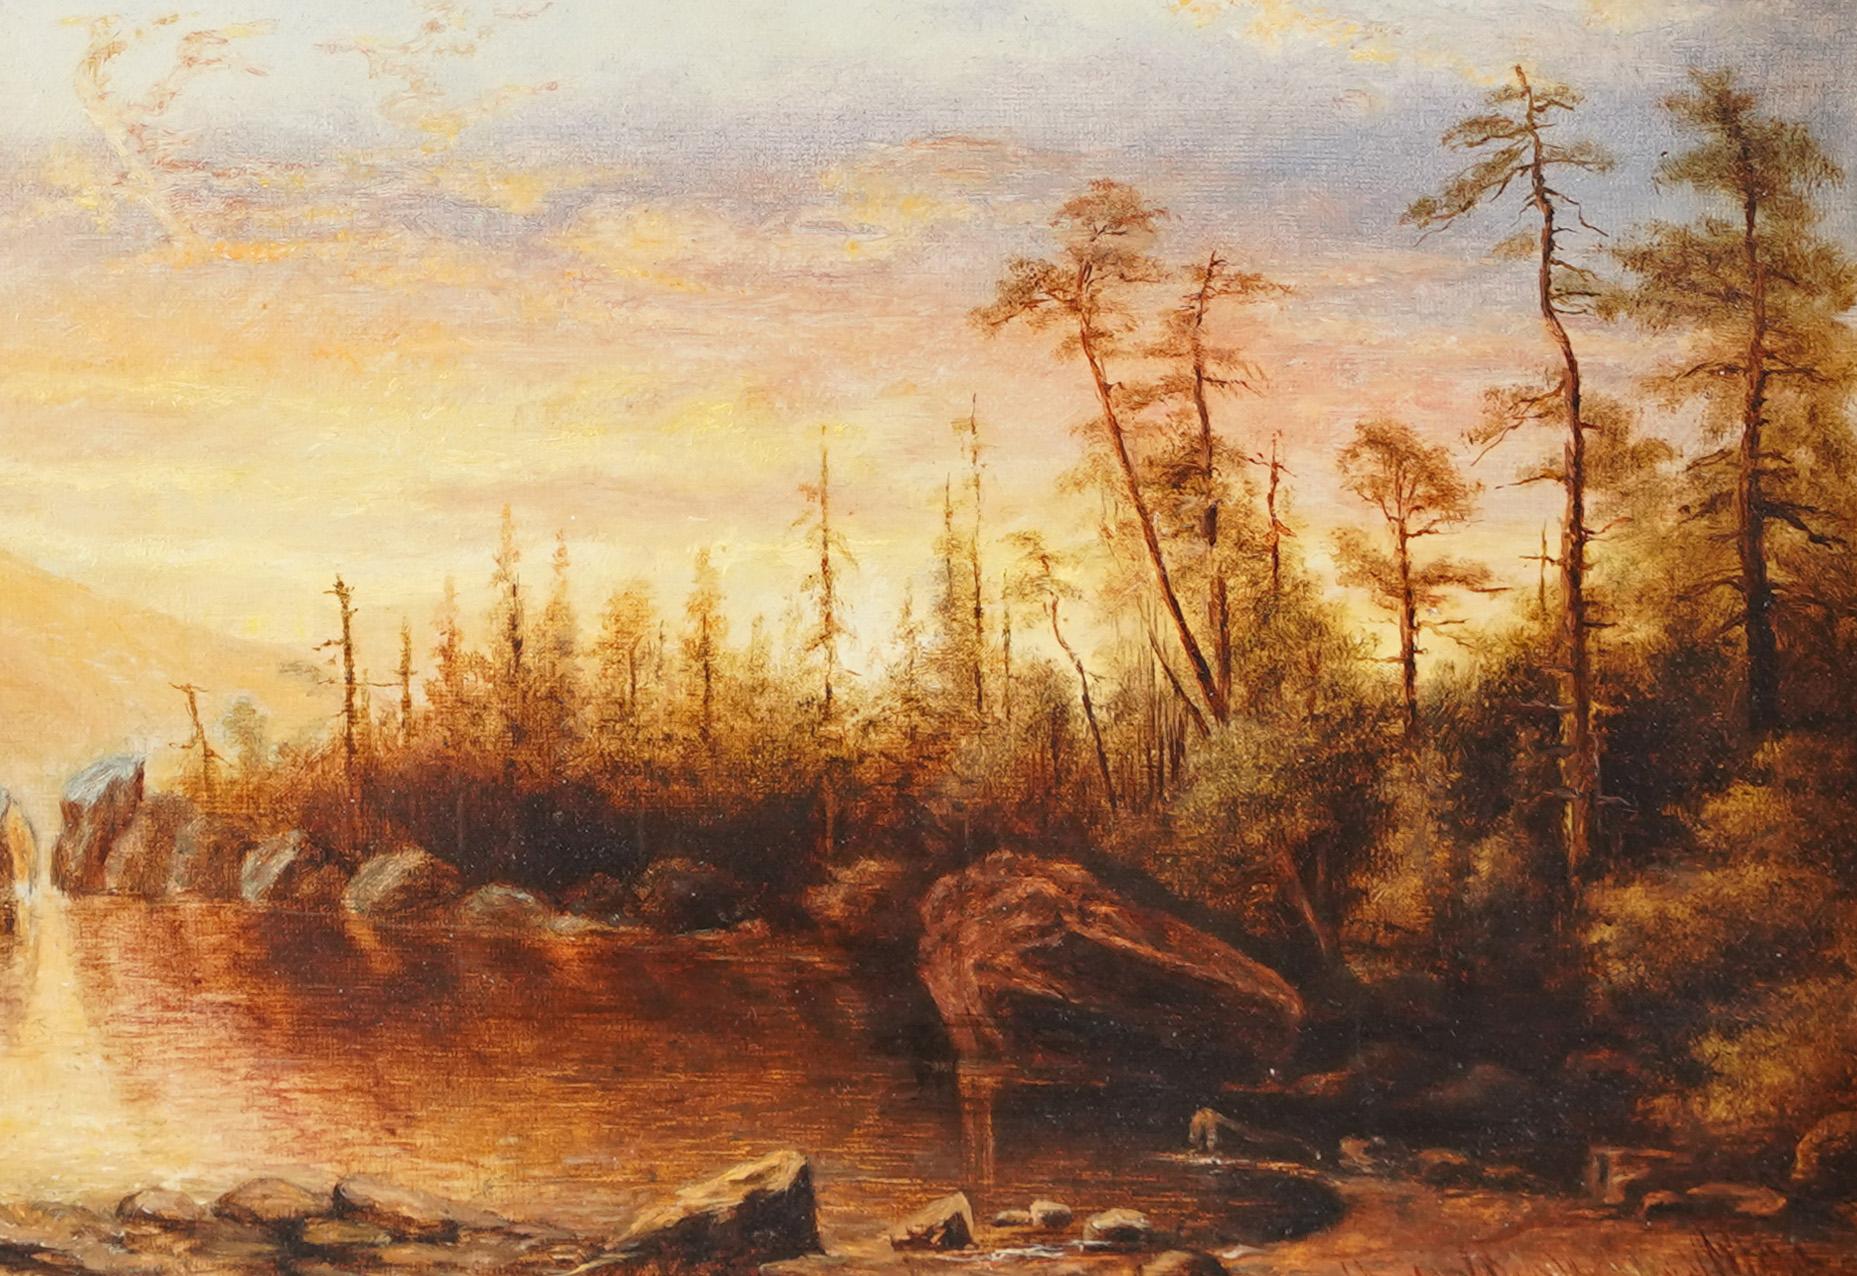 Antique American impressionist western landscape oil painting.  Oil on canvas. Framed.  Image size, 17L x 9H.